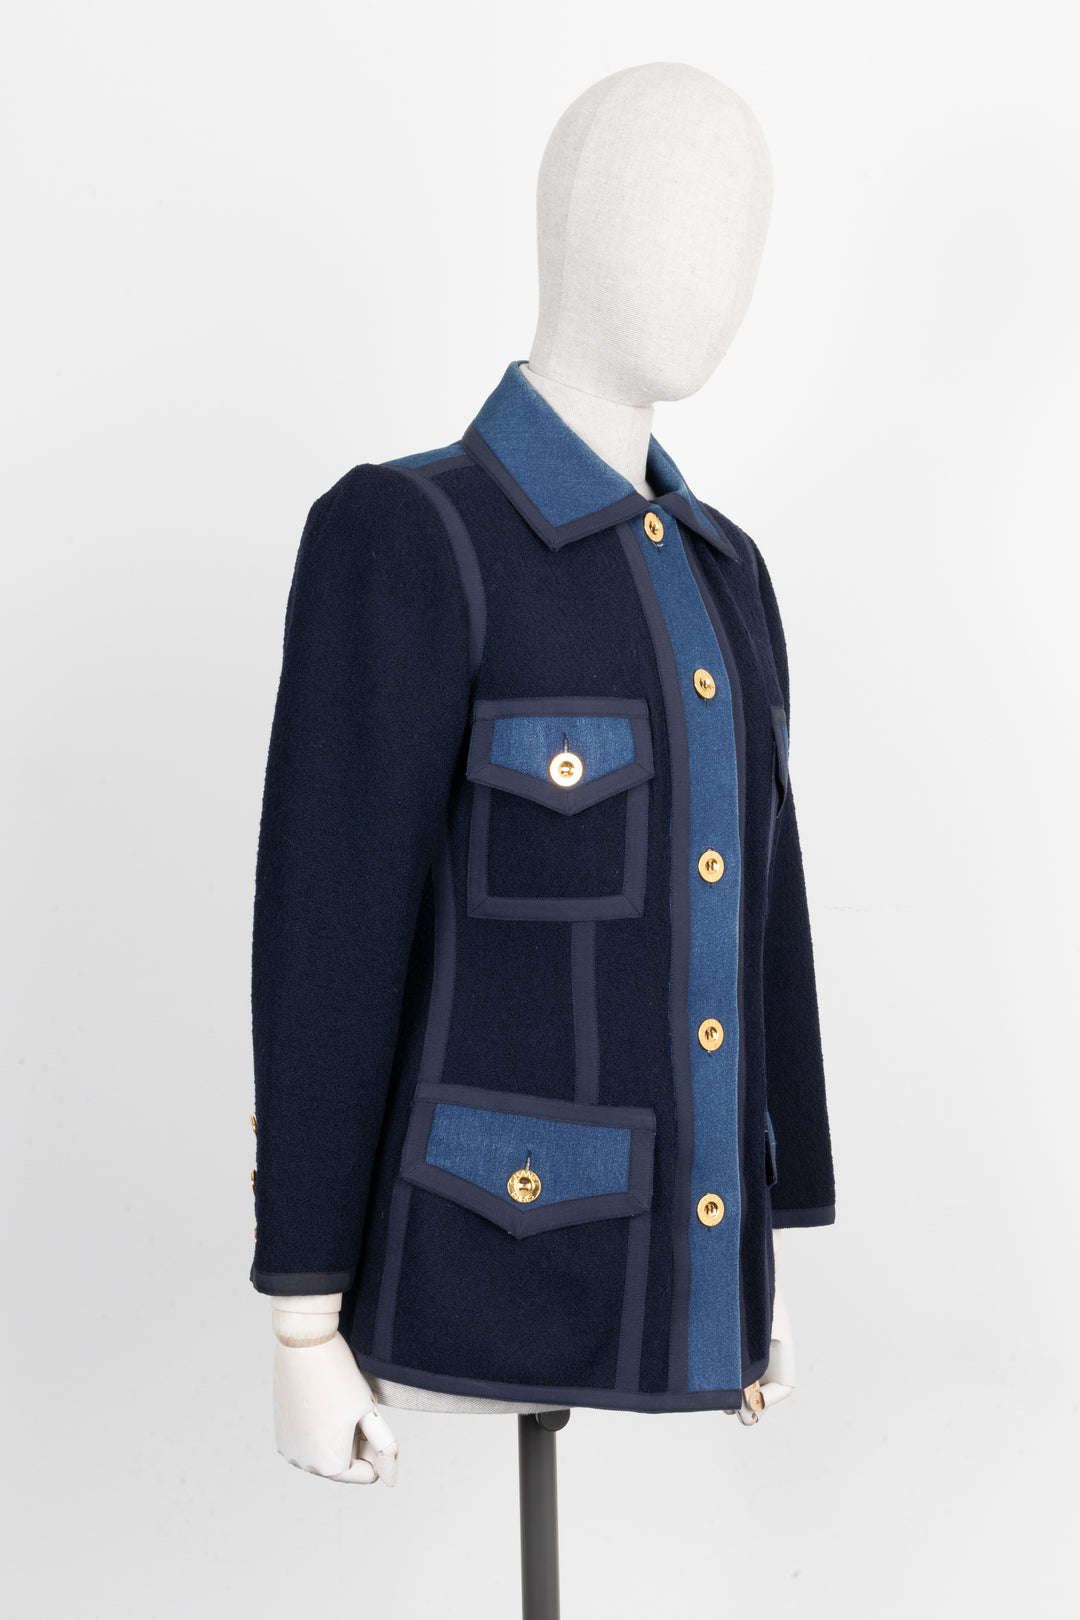 CHANEL Tweed Denim Detail Jacket Blue